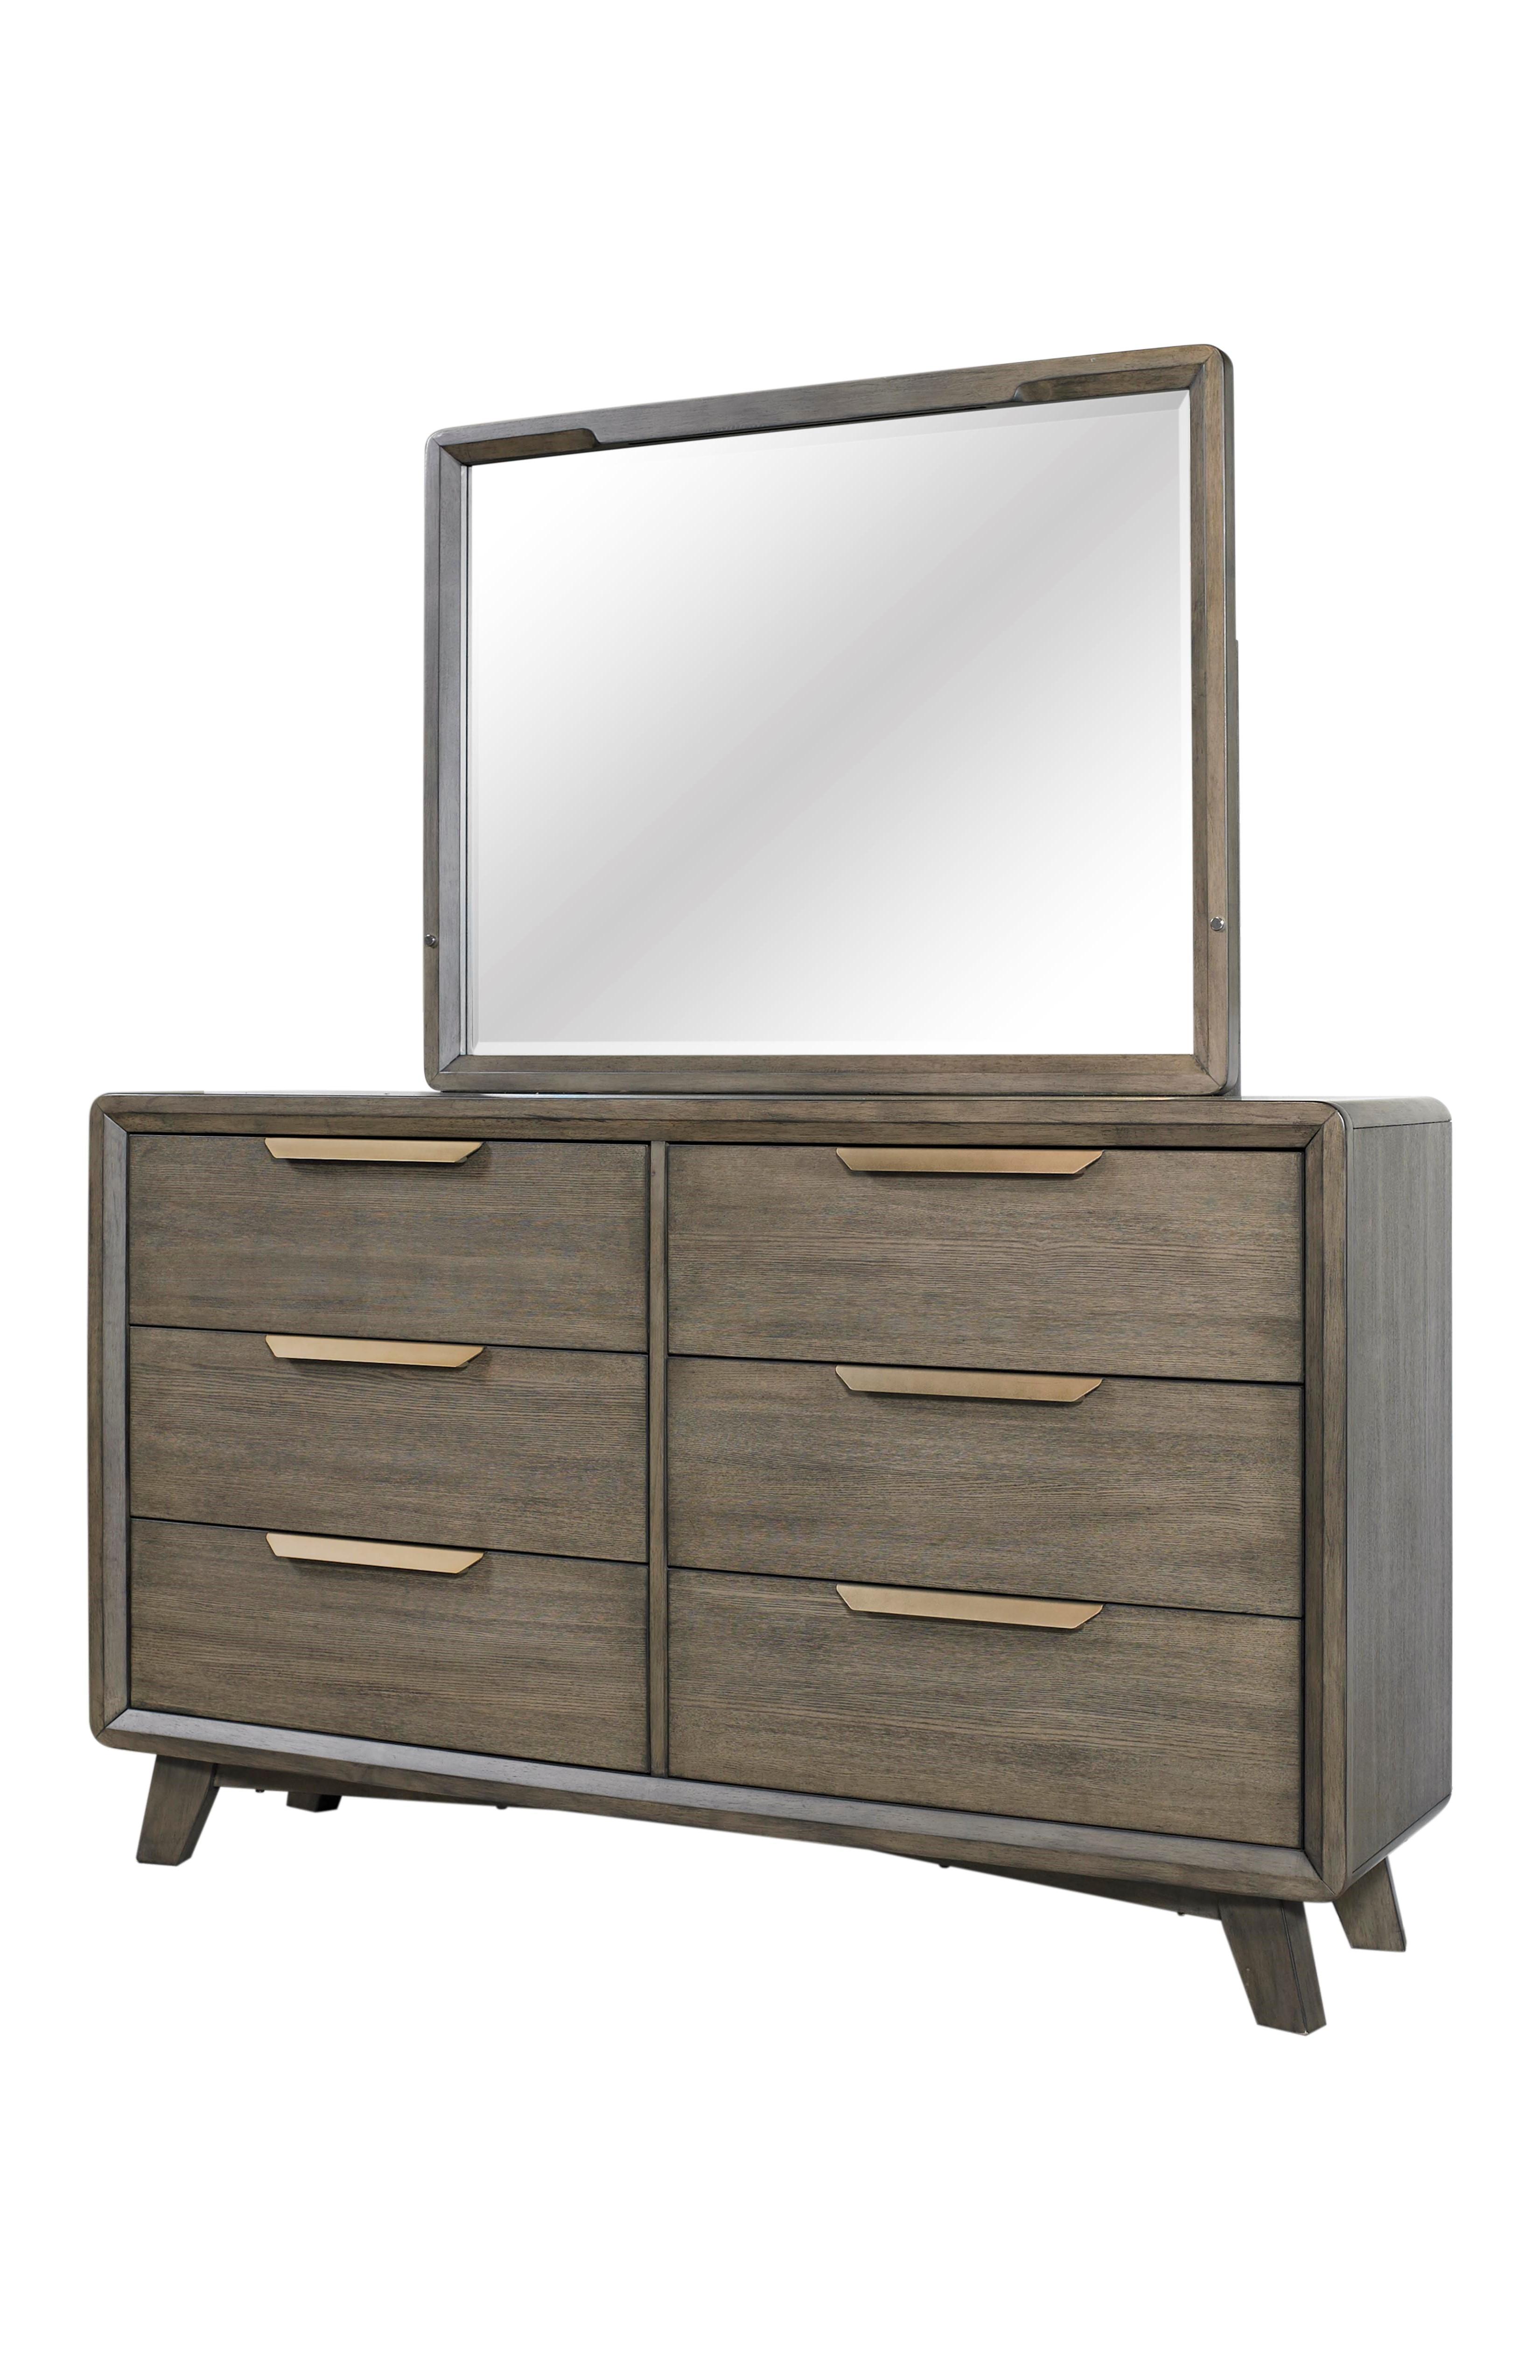 Contemporary, Modern Dresser With Mirror VALENCIA 213-130-Set 213-130-Set in Coffee, Brown 